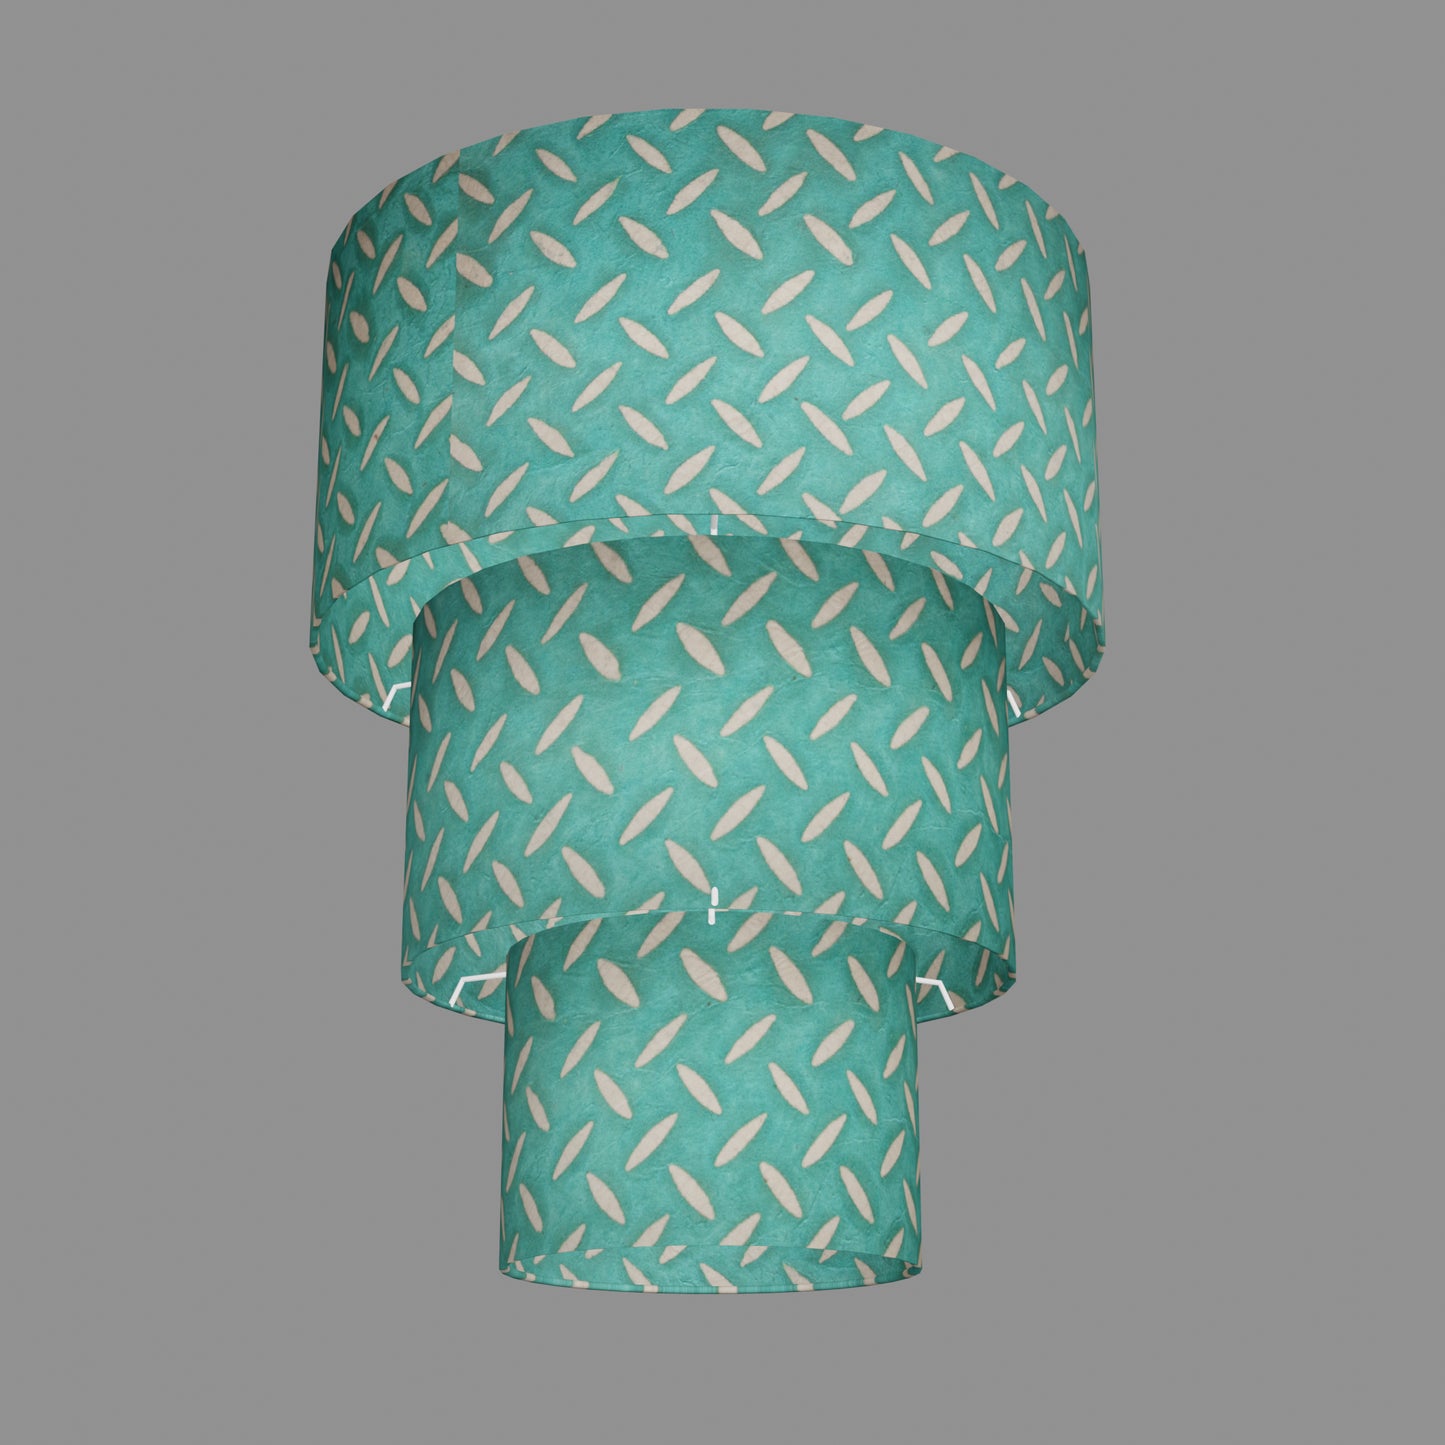 3 Tier Lamp Shade - P15 - Batik Tread Plate Mint Green, 40cm x 20cm, 30cm x 17.5cm & 20cm x 15cm